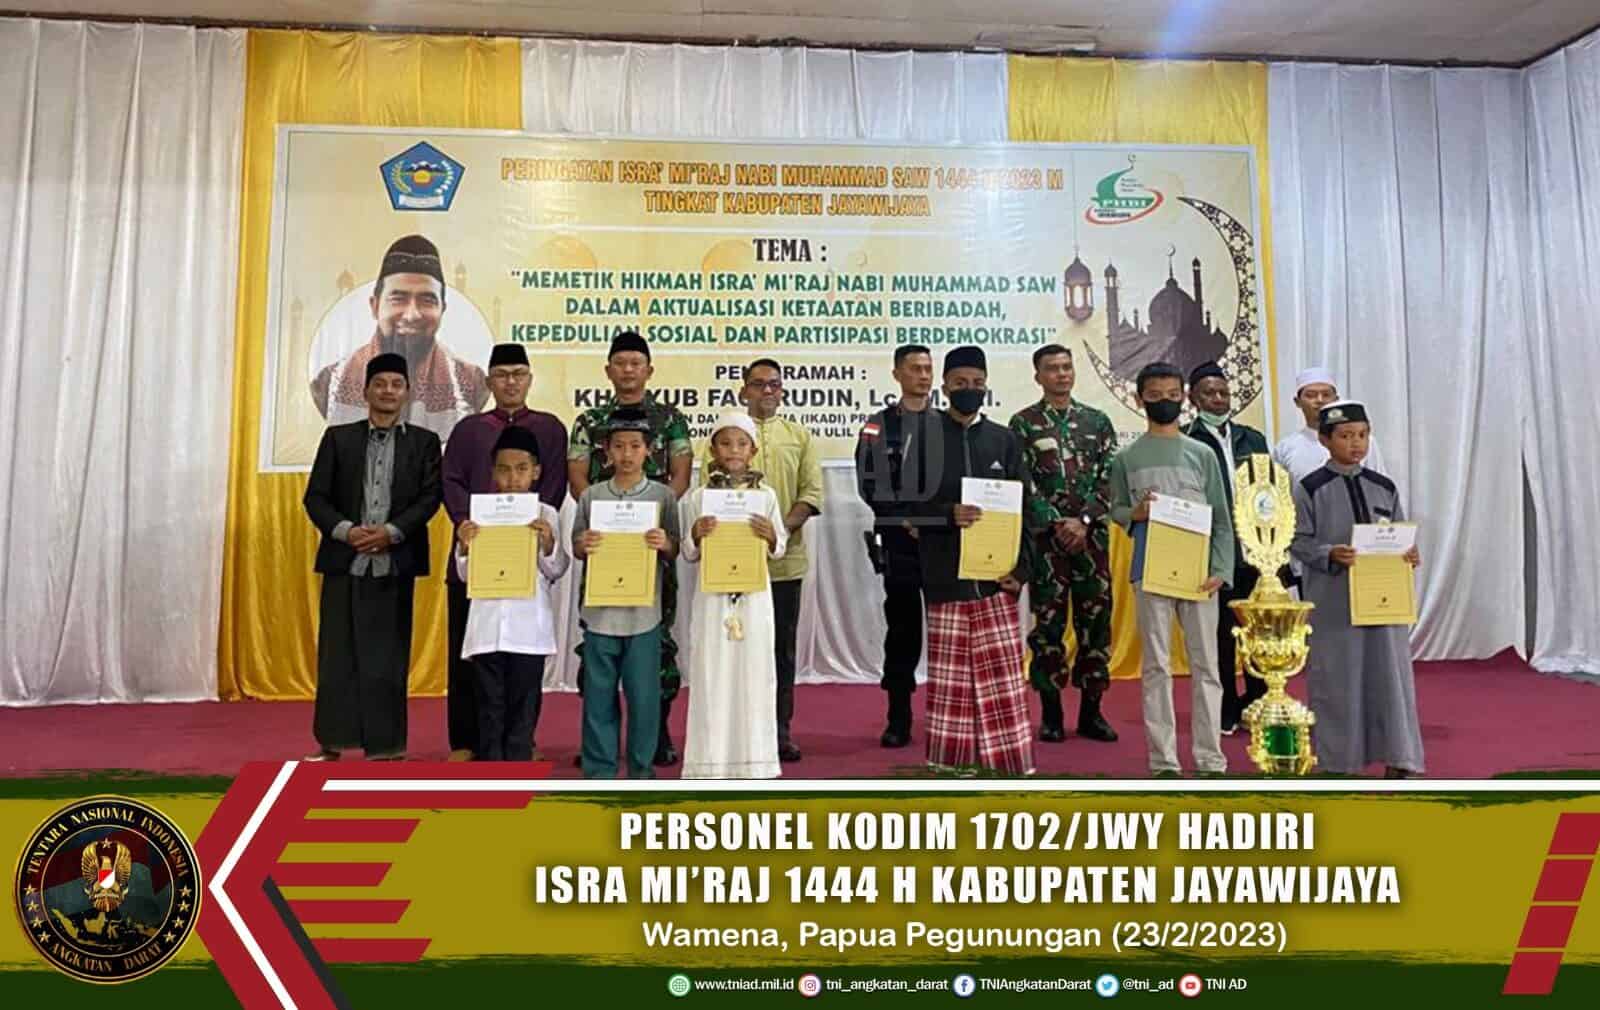 Personel Kodim 1702/JWY Hadiri Isra Mi’raj 1444 H Kabupaten Jayawijaya